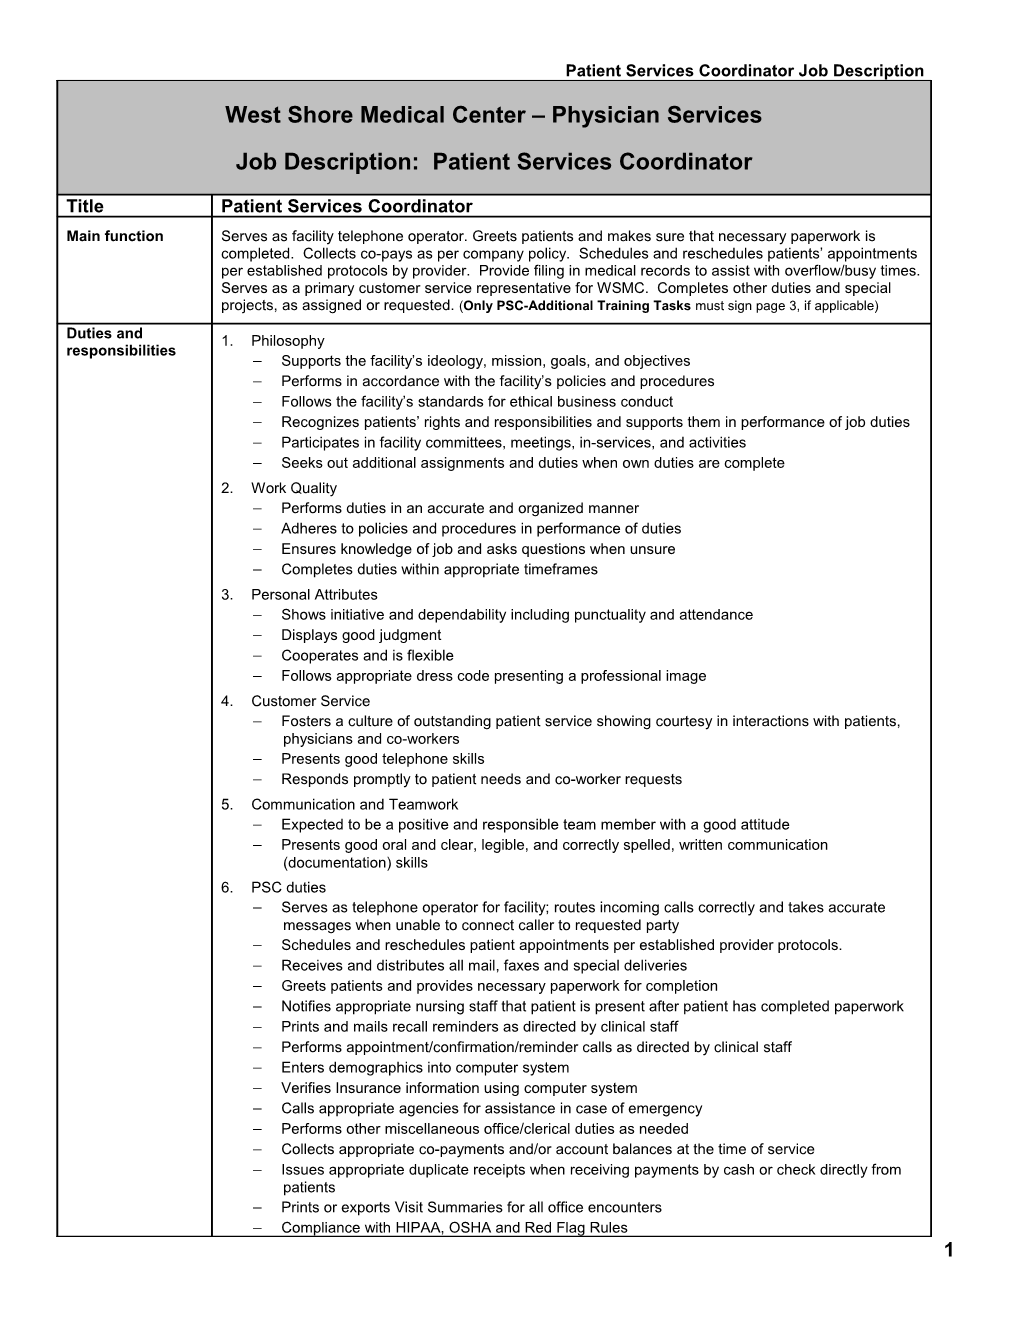 Job Description / Job Evaluation s1